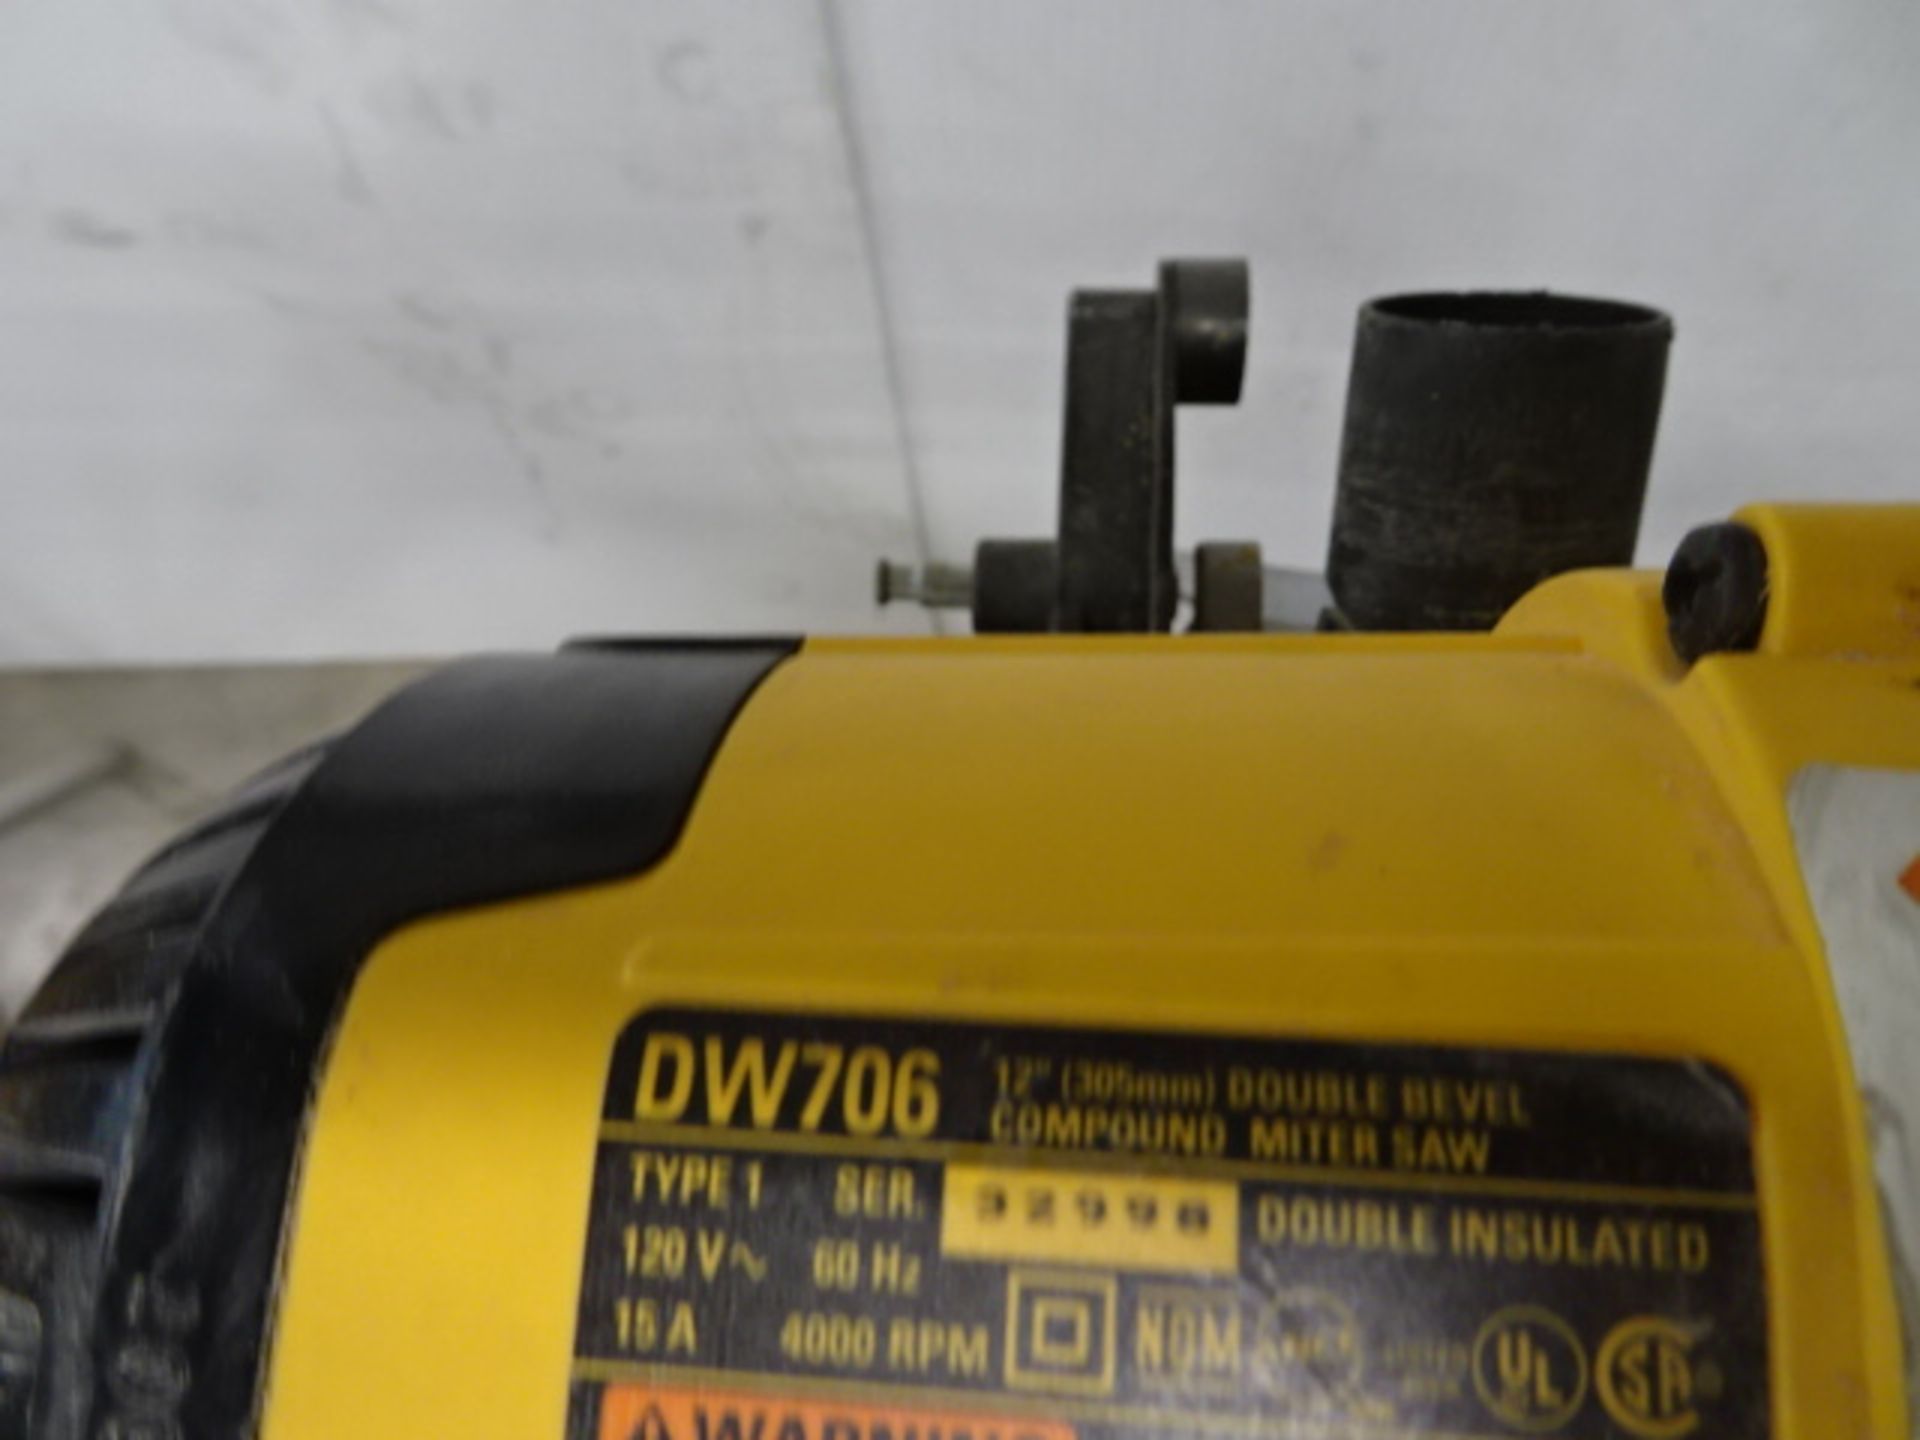 Scie à onglets "Dewalt" DW706 double bevel meter saw - Image 3 of 3